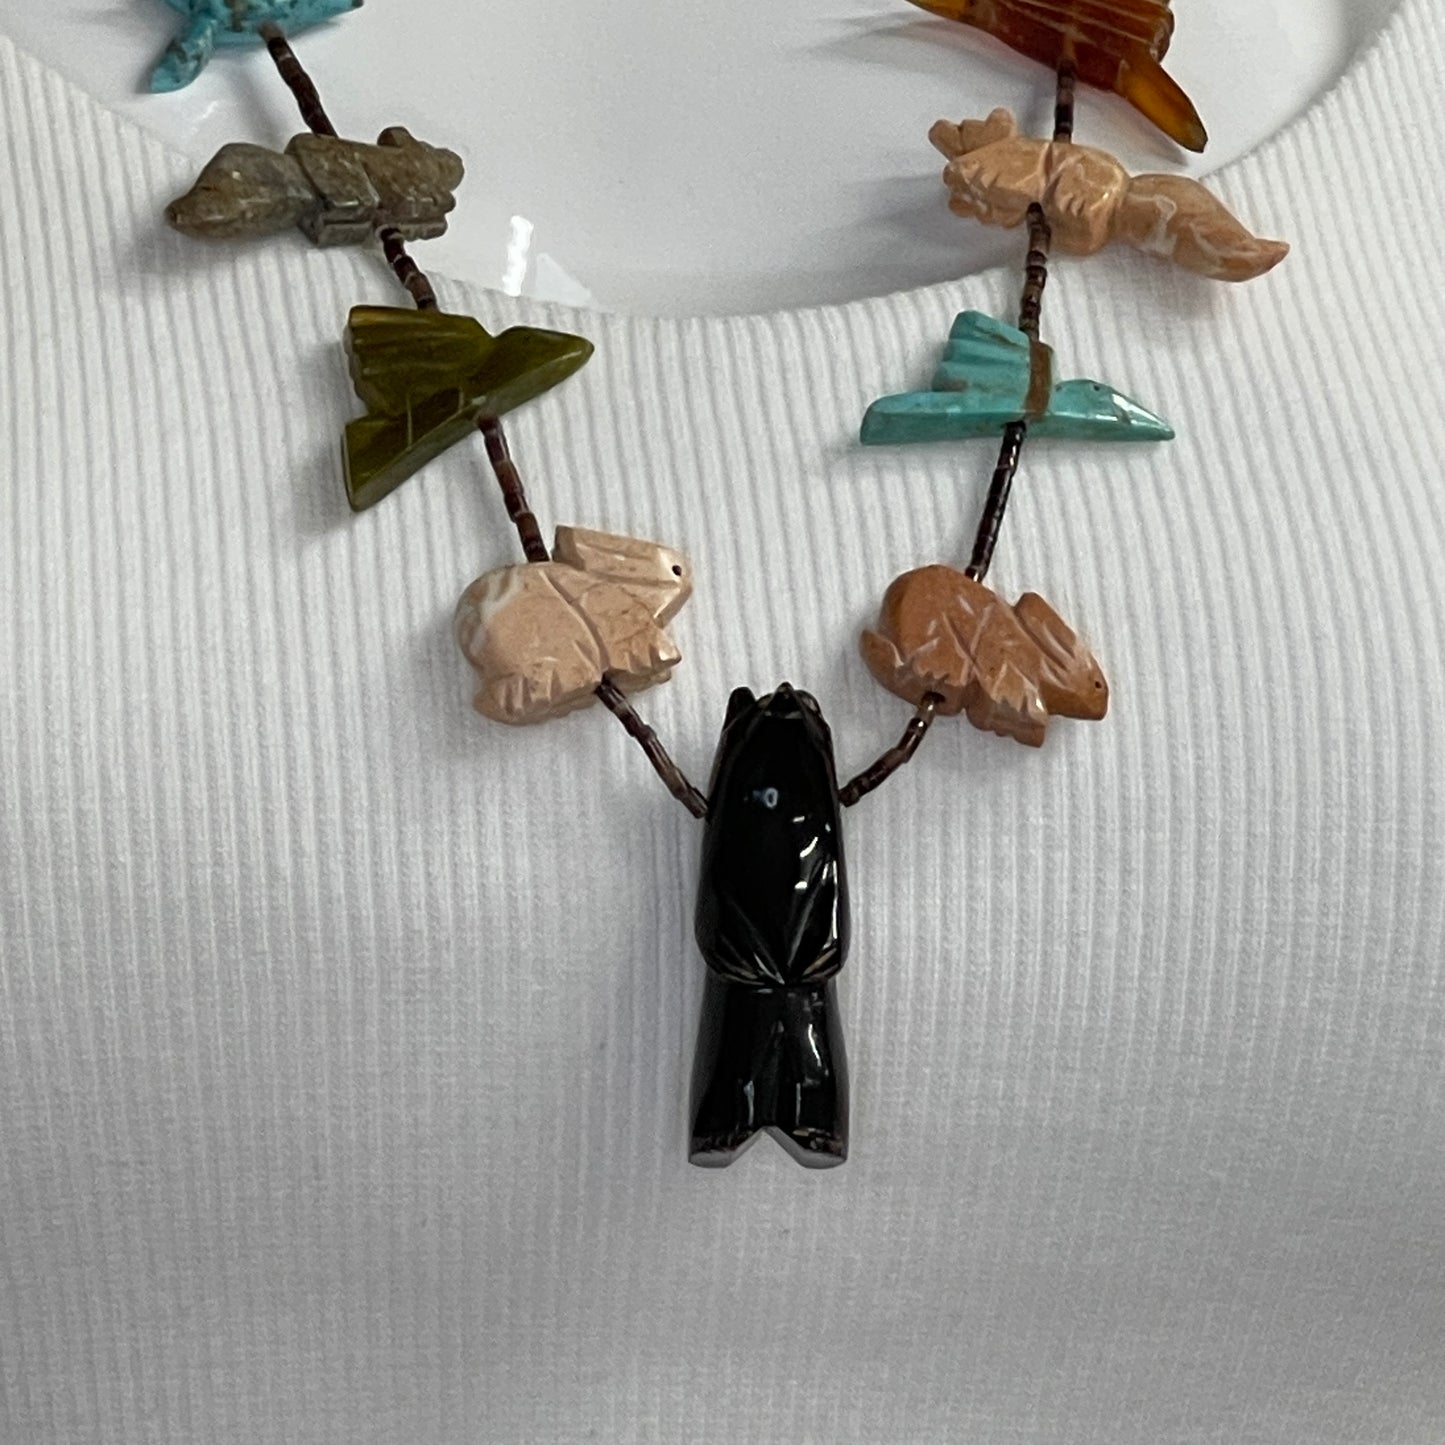 1 Strand Fetish Necklace with Black Bear